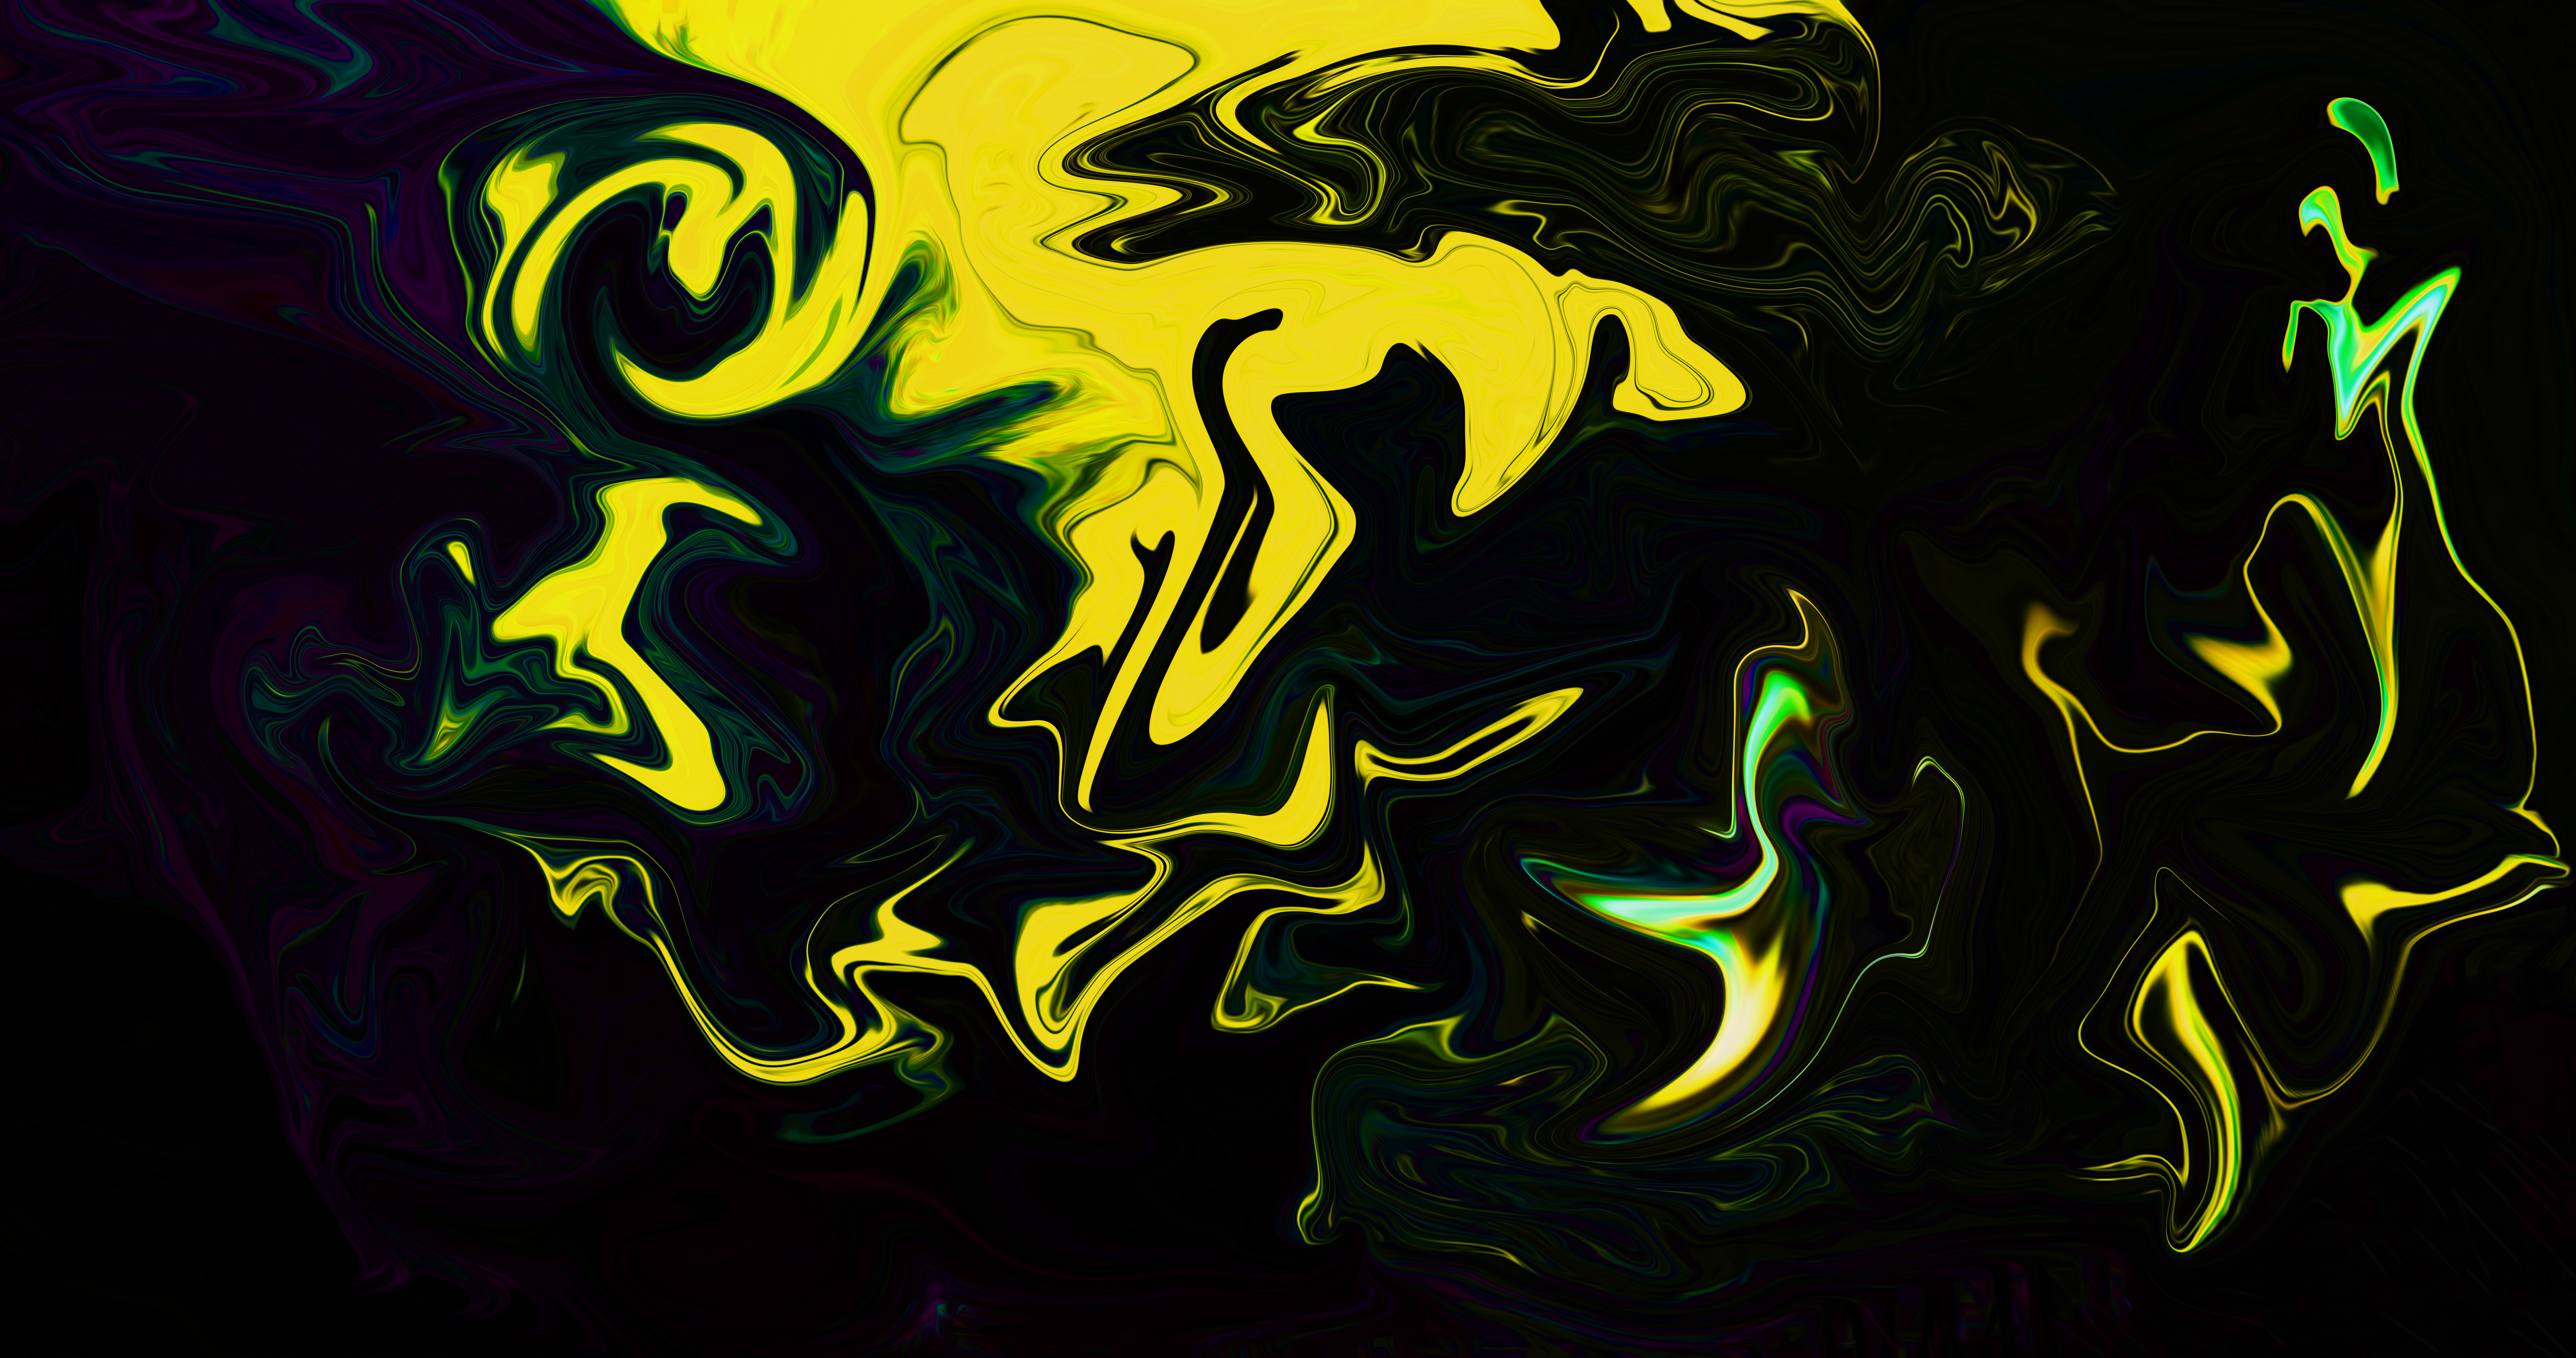 Abstract Shapes Colorful Fluid Liquid Artwork Digital Art Paint Brushes Neon 8 K Yellow Dark 8192x4320